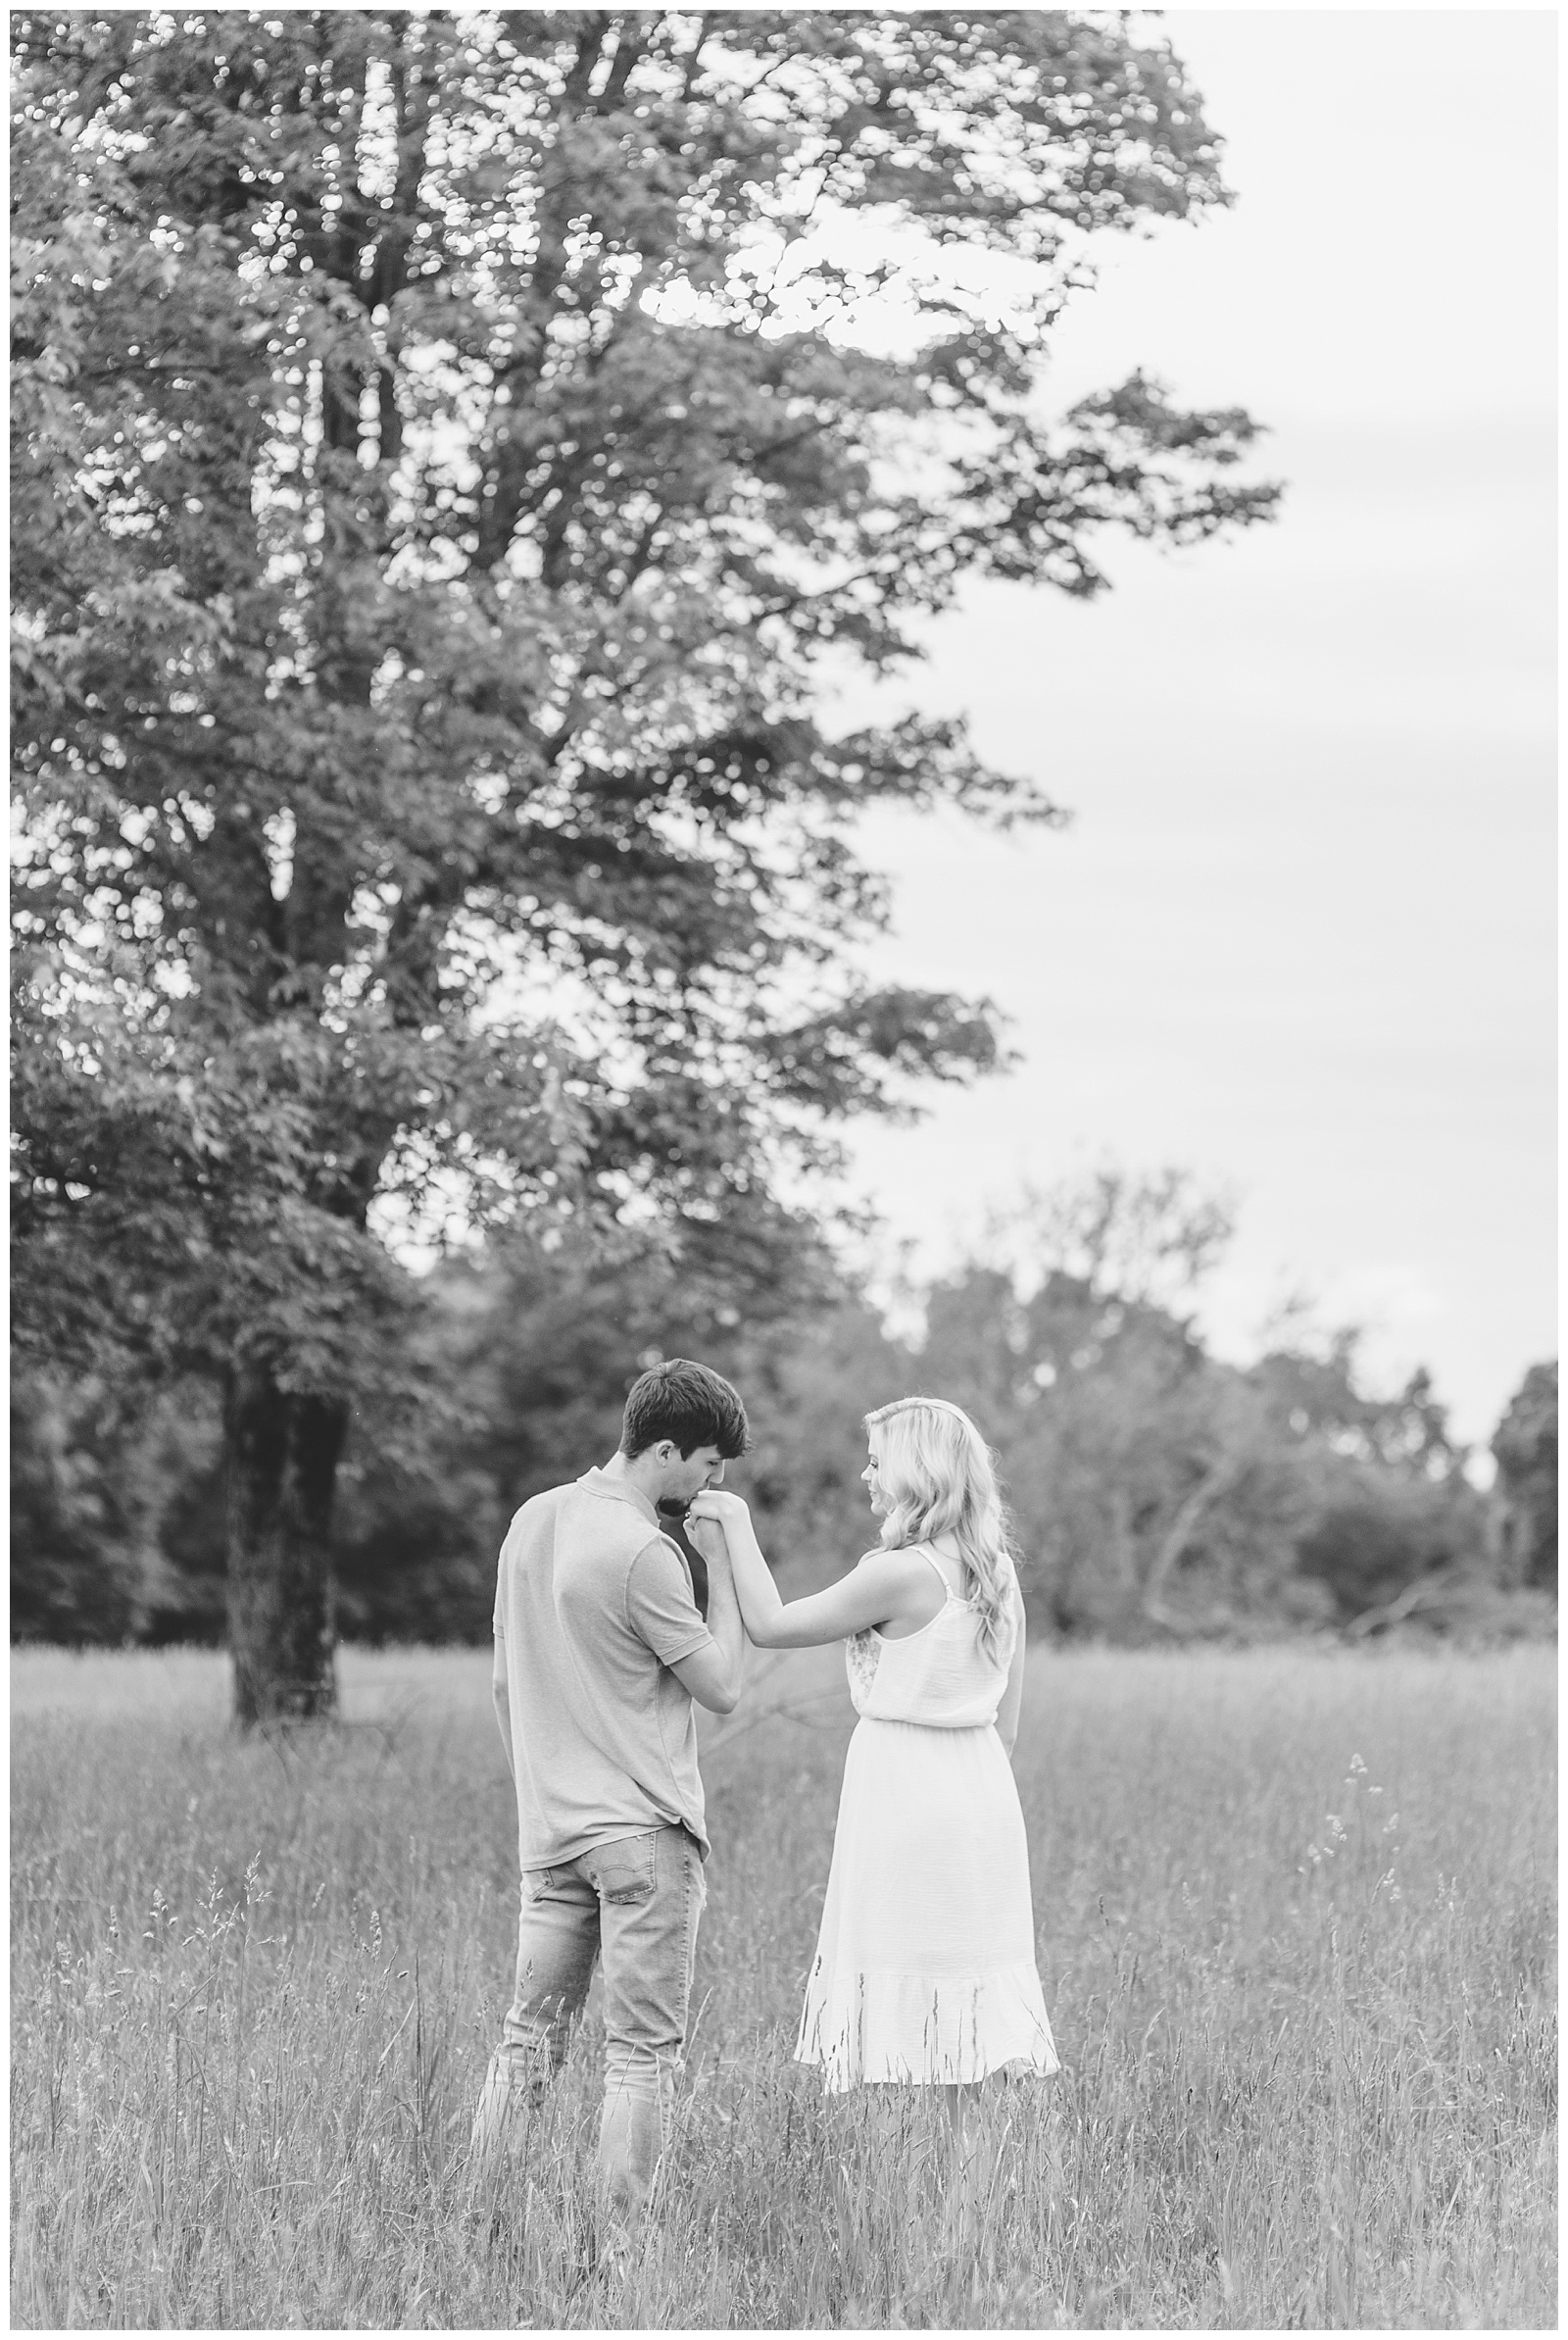 everleigh-photography-cincinnati-wedding-photographer-Taylor-and-braxton-louisville-engagement-session-15